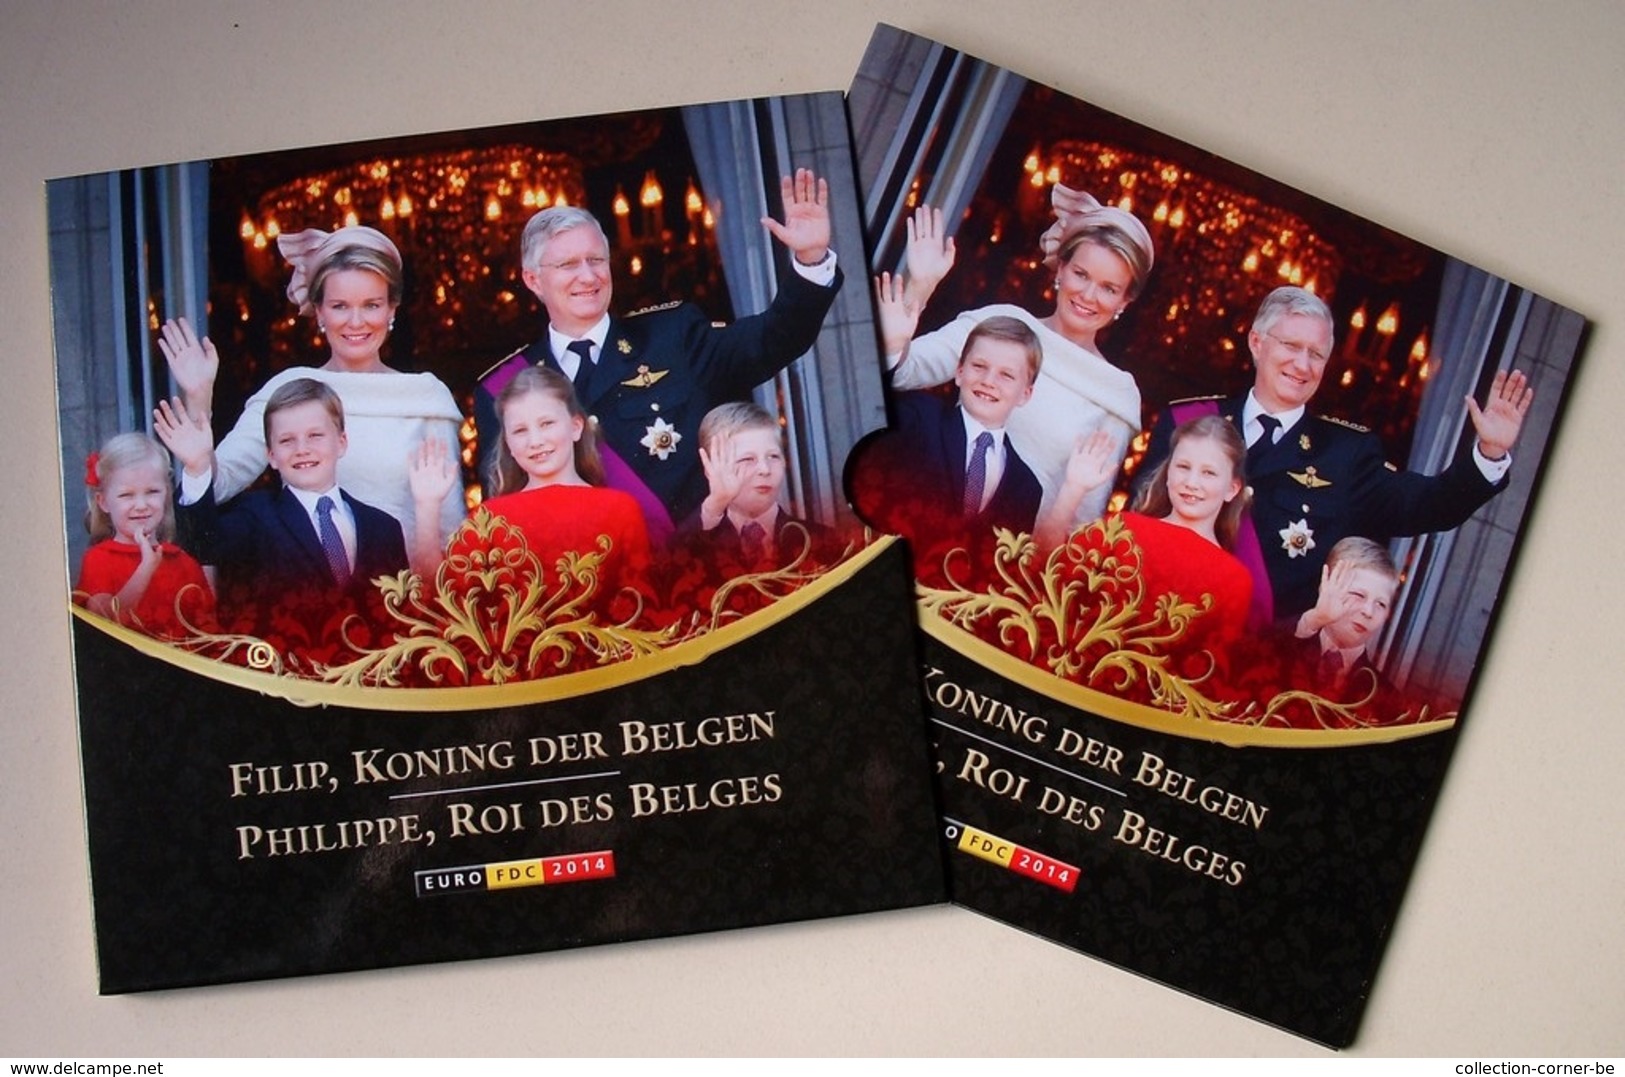 Belgie, euro set 2014, Filip koning der Belgen  FDC, van 1 cent tot 2 euro